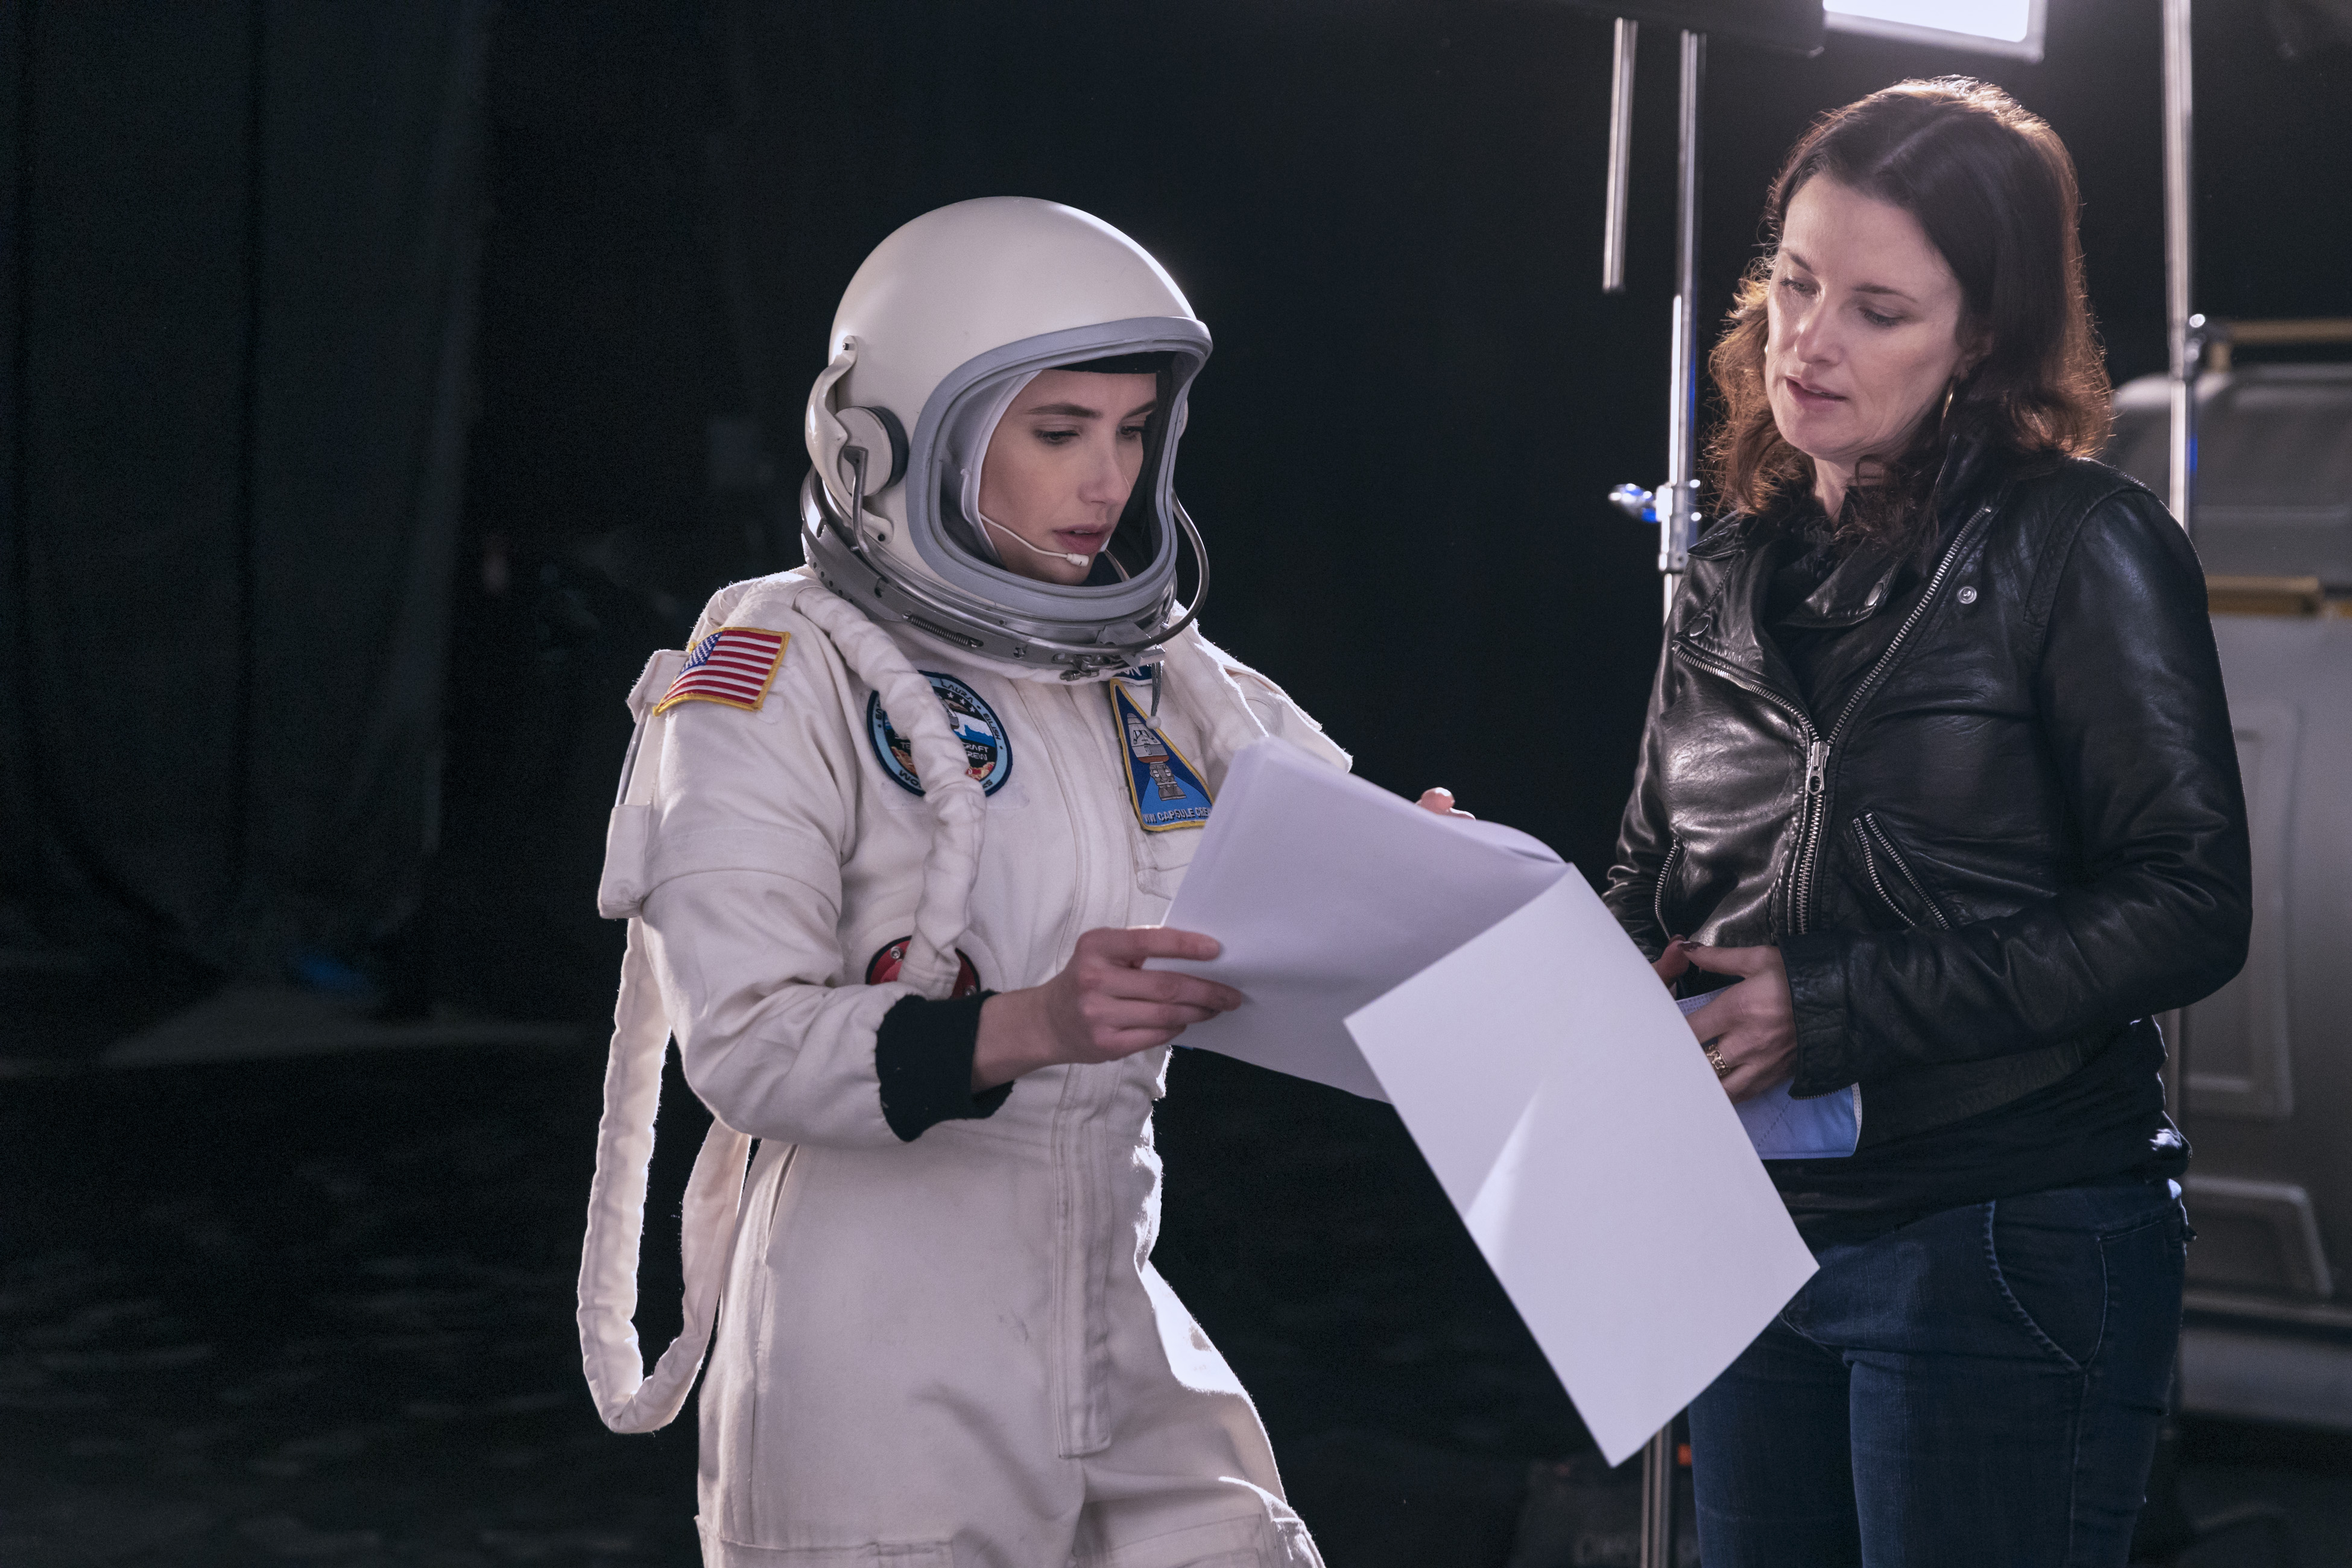 Emma Roberts wearing an astronaut suit going over a script with director Liz W. Garcia